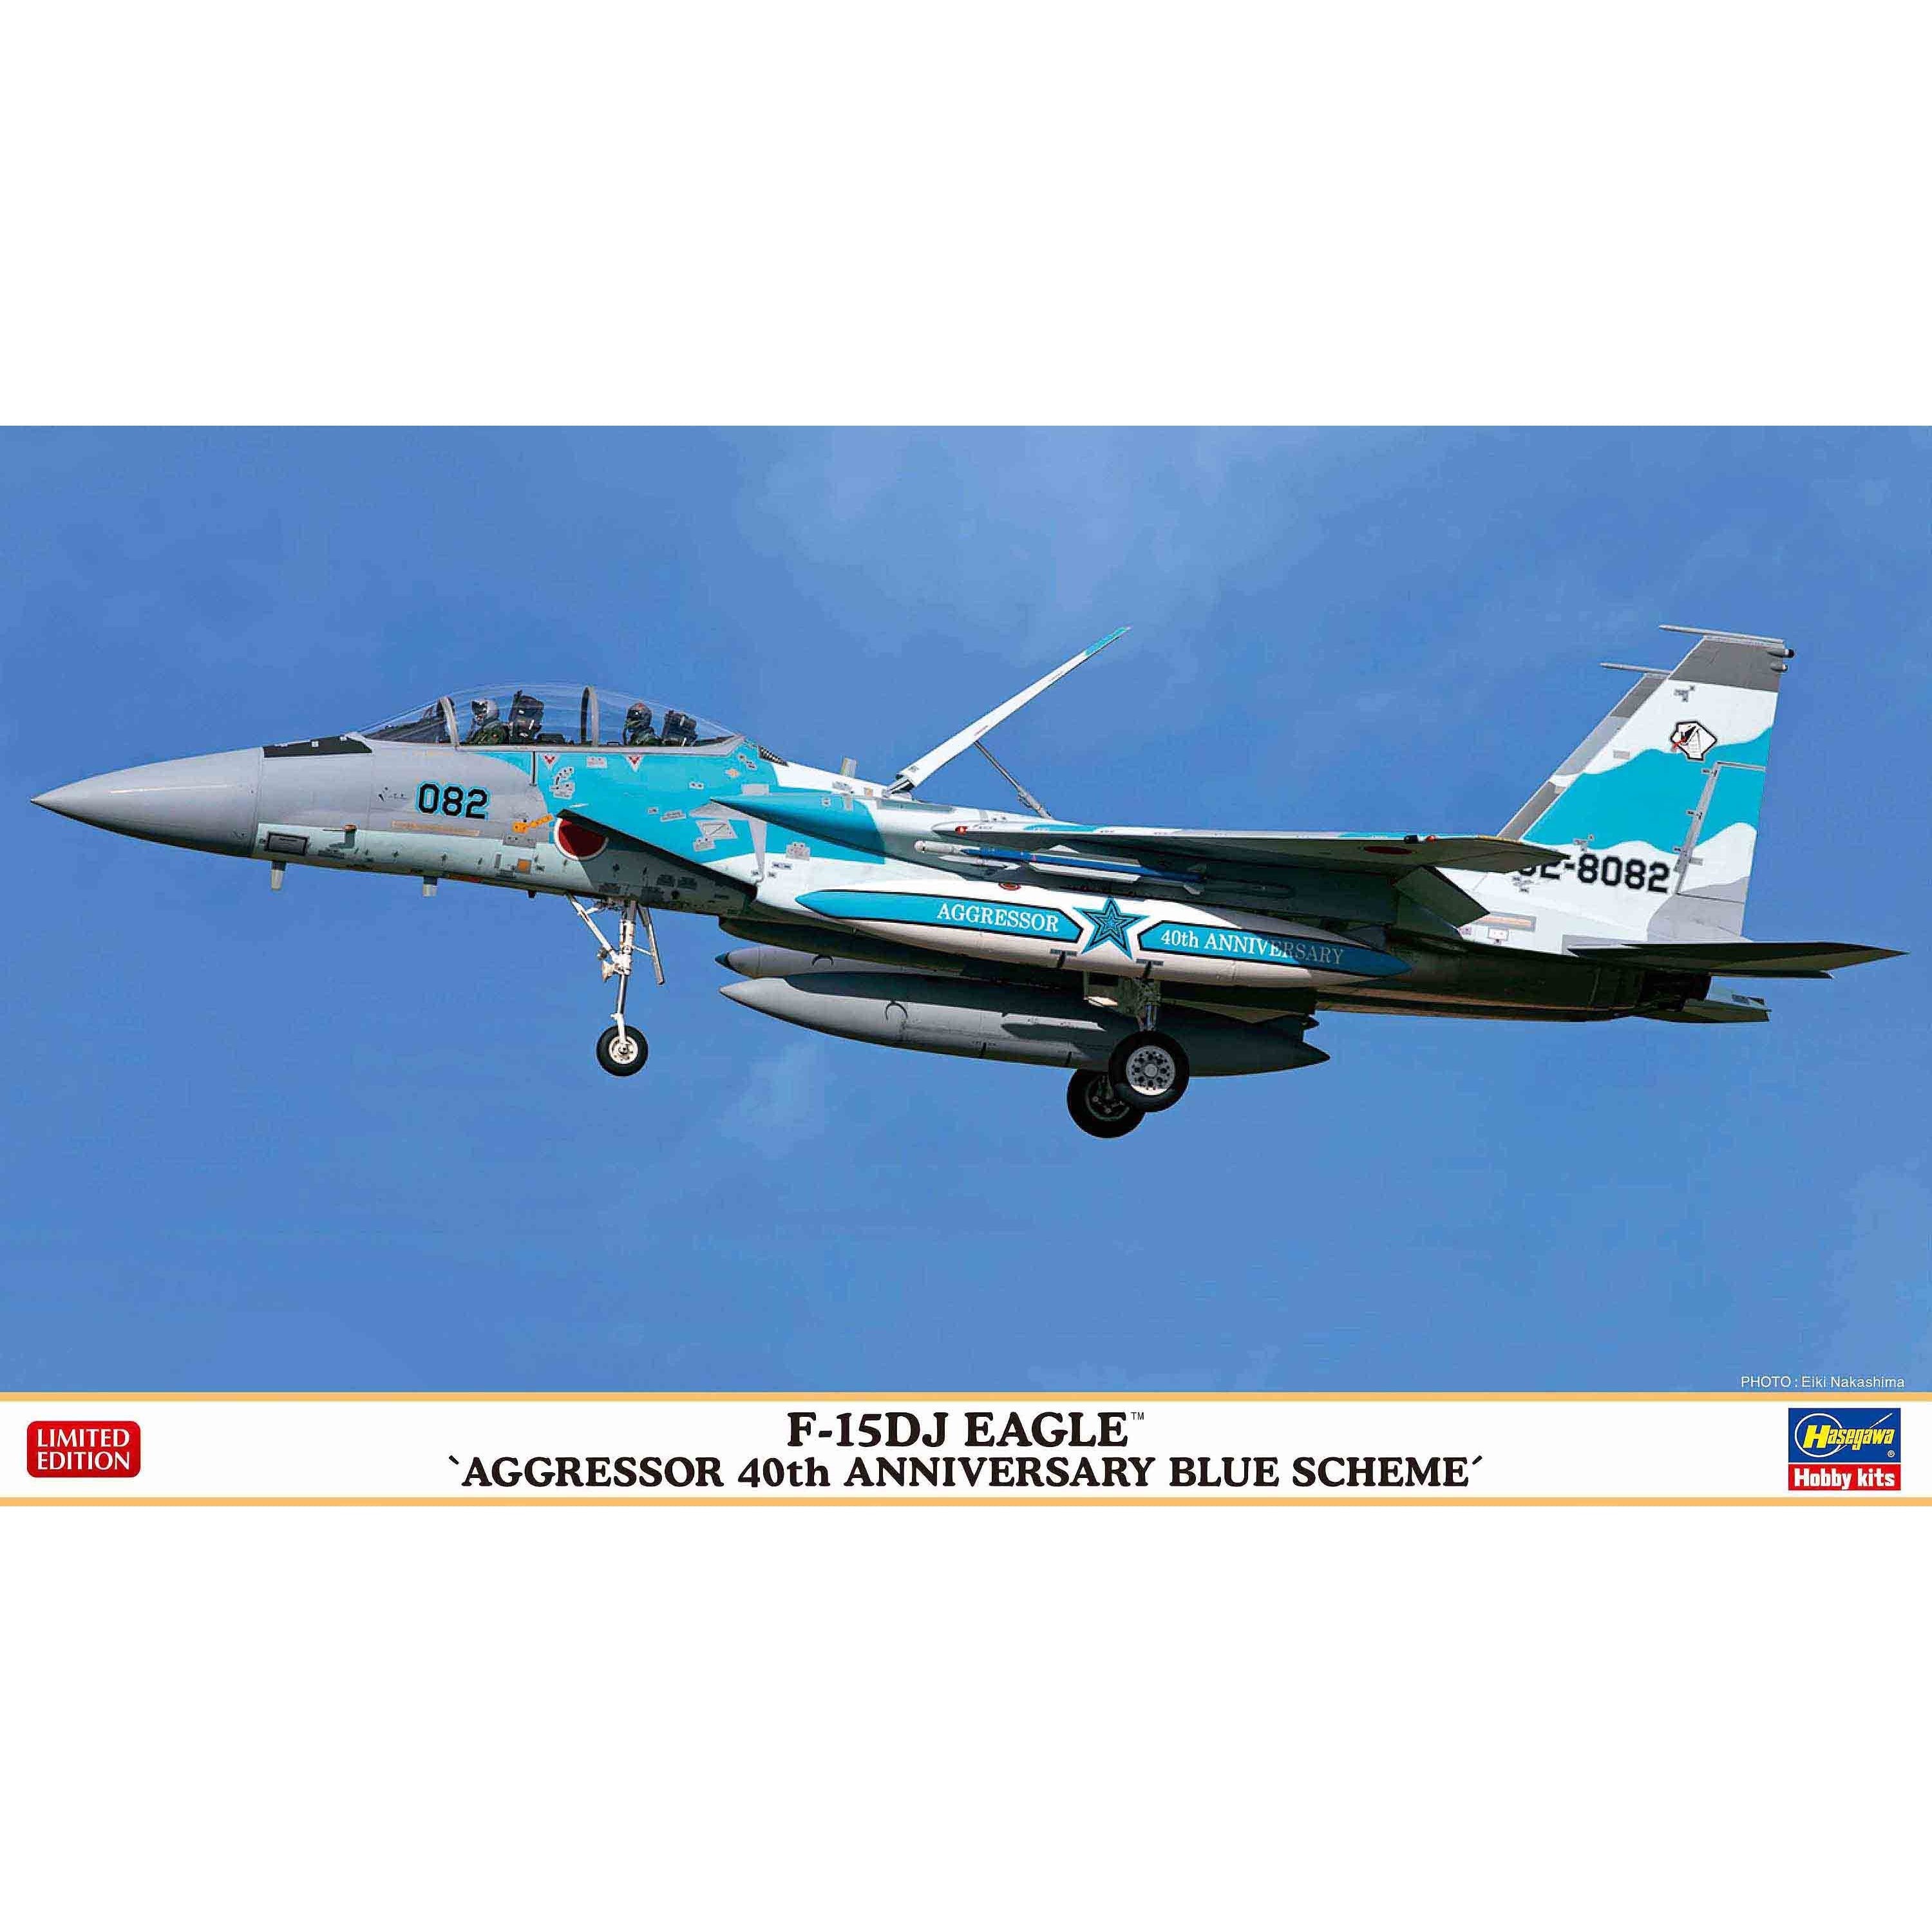 F-15DJ Eagle "Aggressor 40th Anniversary Blue Scheme" 1/72 #02403 by Hasegawa